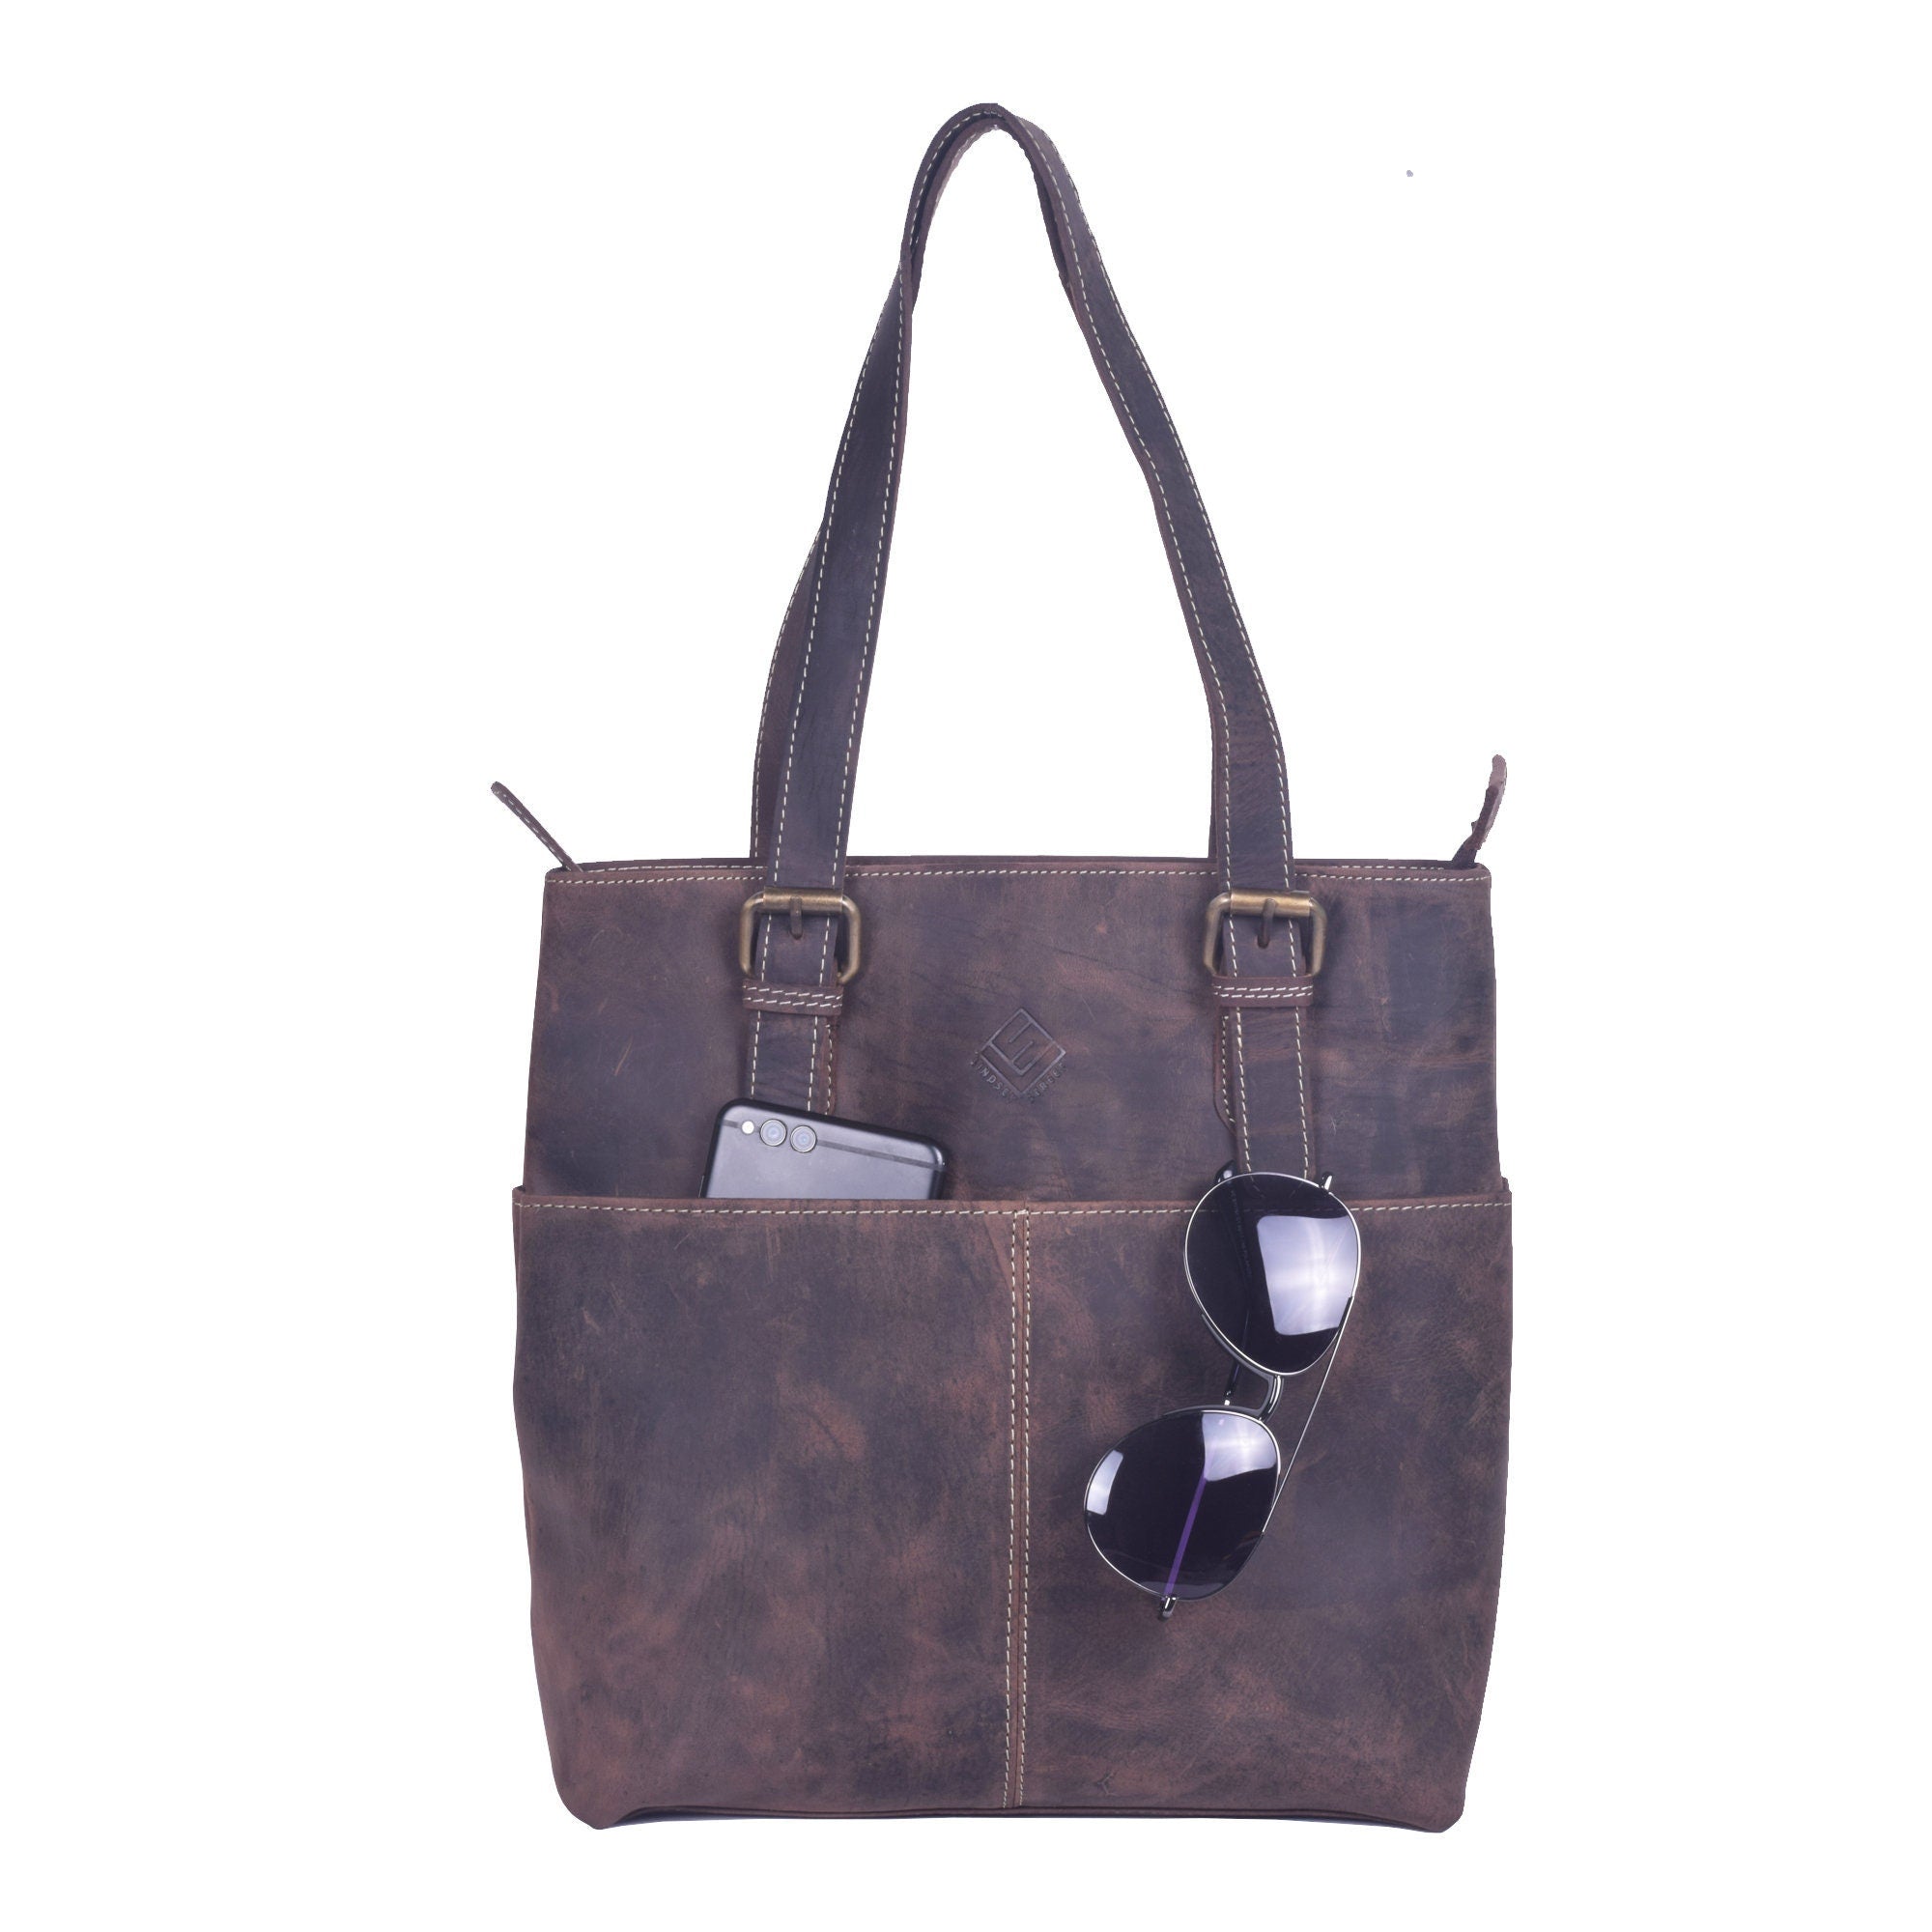 Buy Fargo Stylish Women Tote Handbag - Trendy & Spacious Carryall for  Everyday Use (616-627) (Black) at Amazon.in